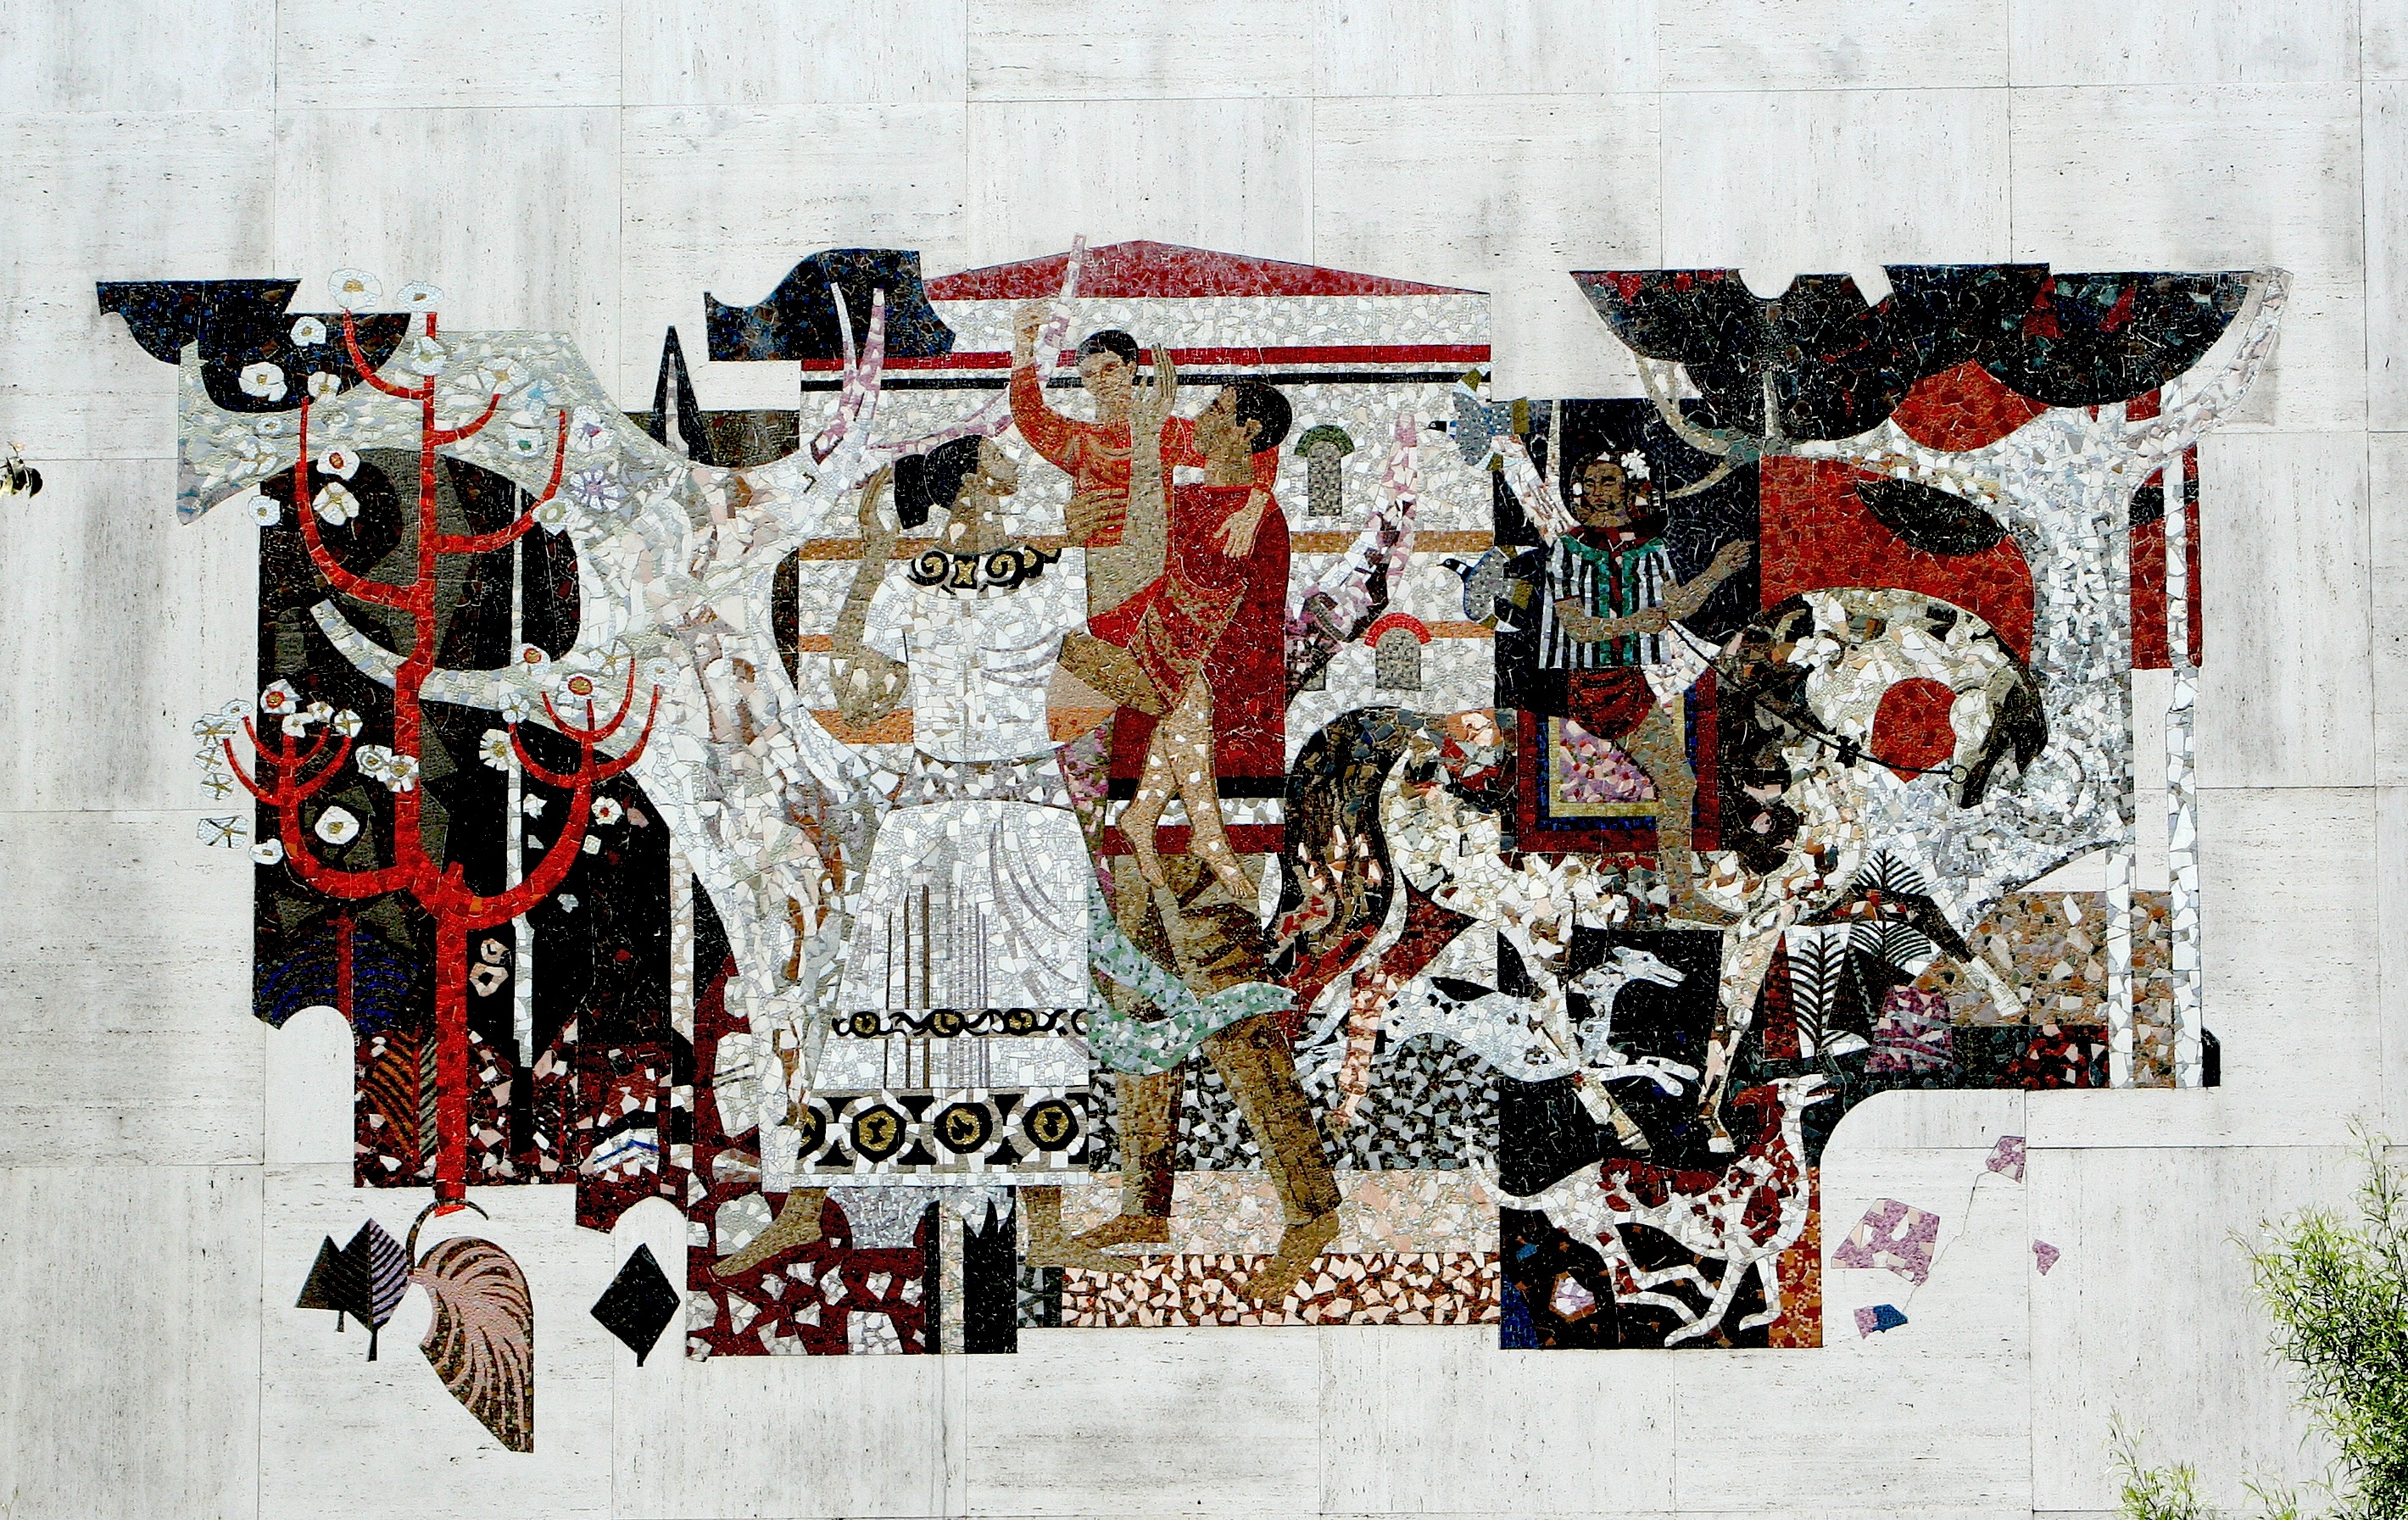 Pomona mosaic, 1963